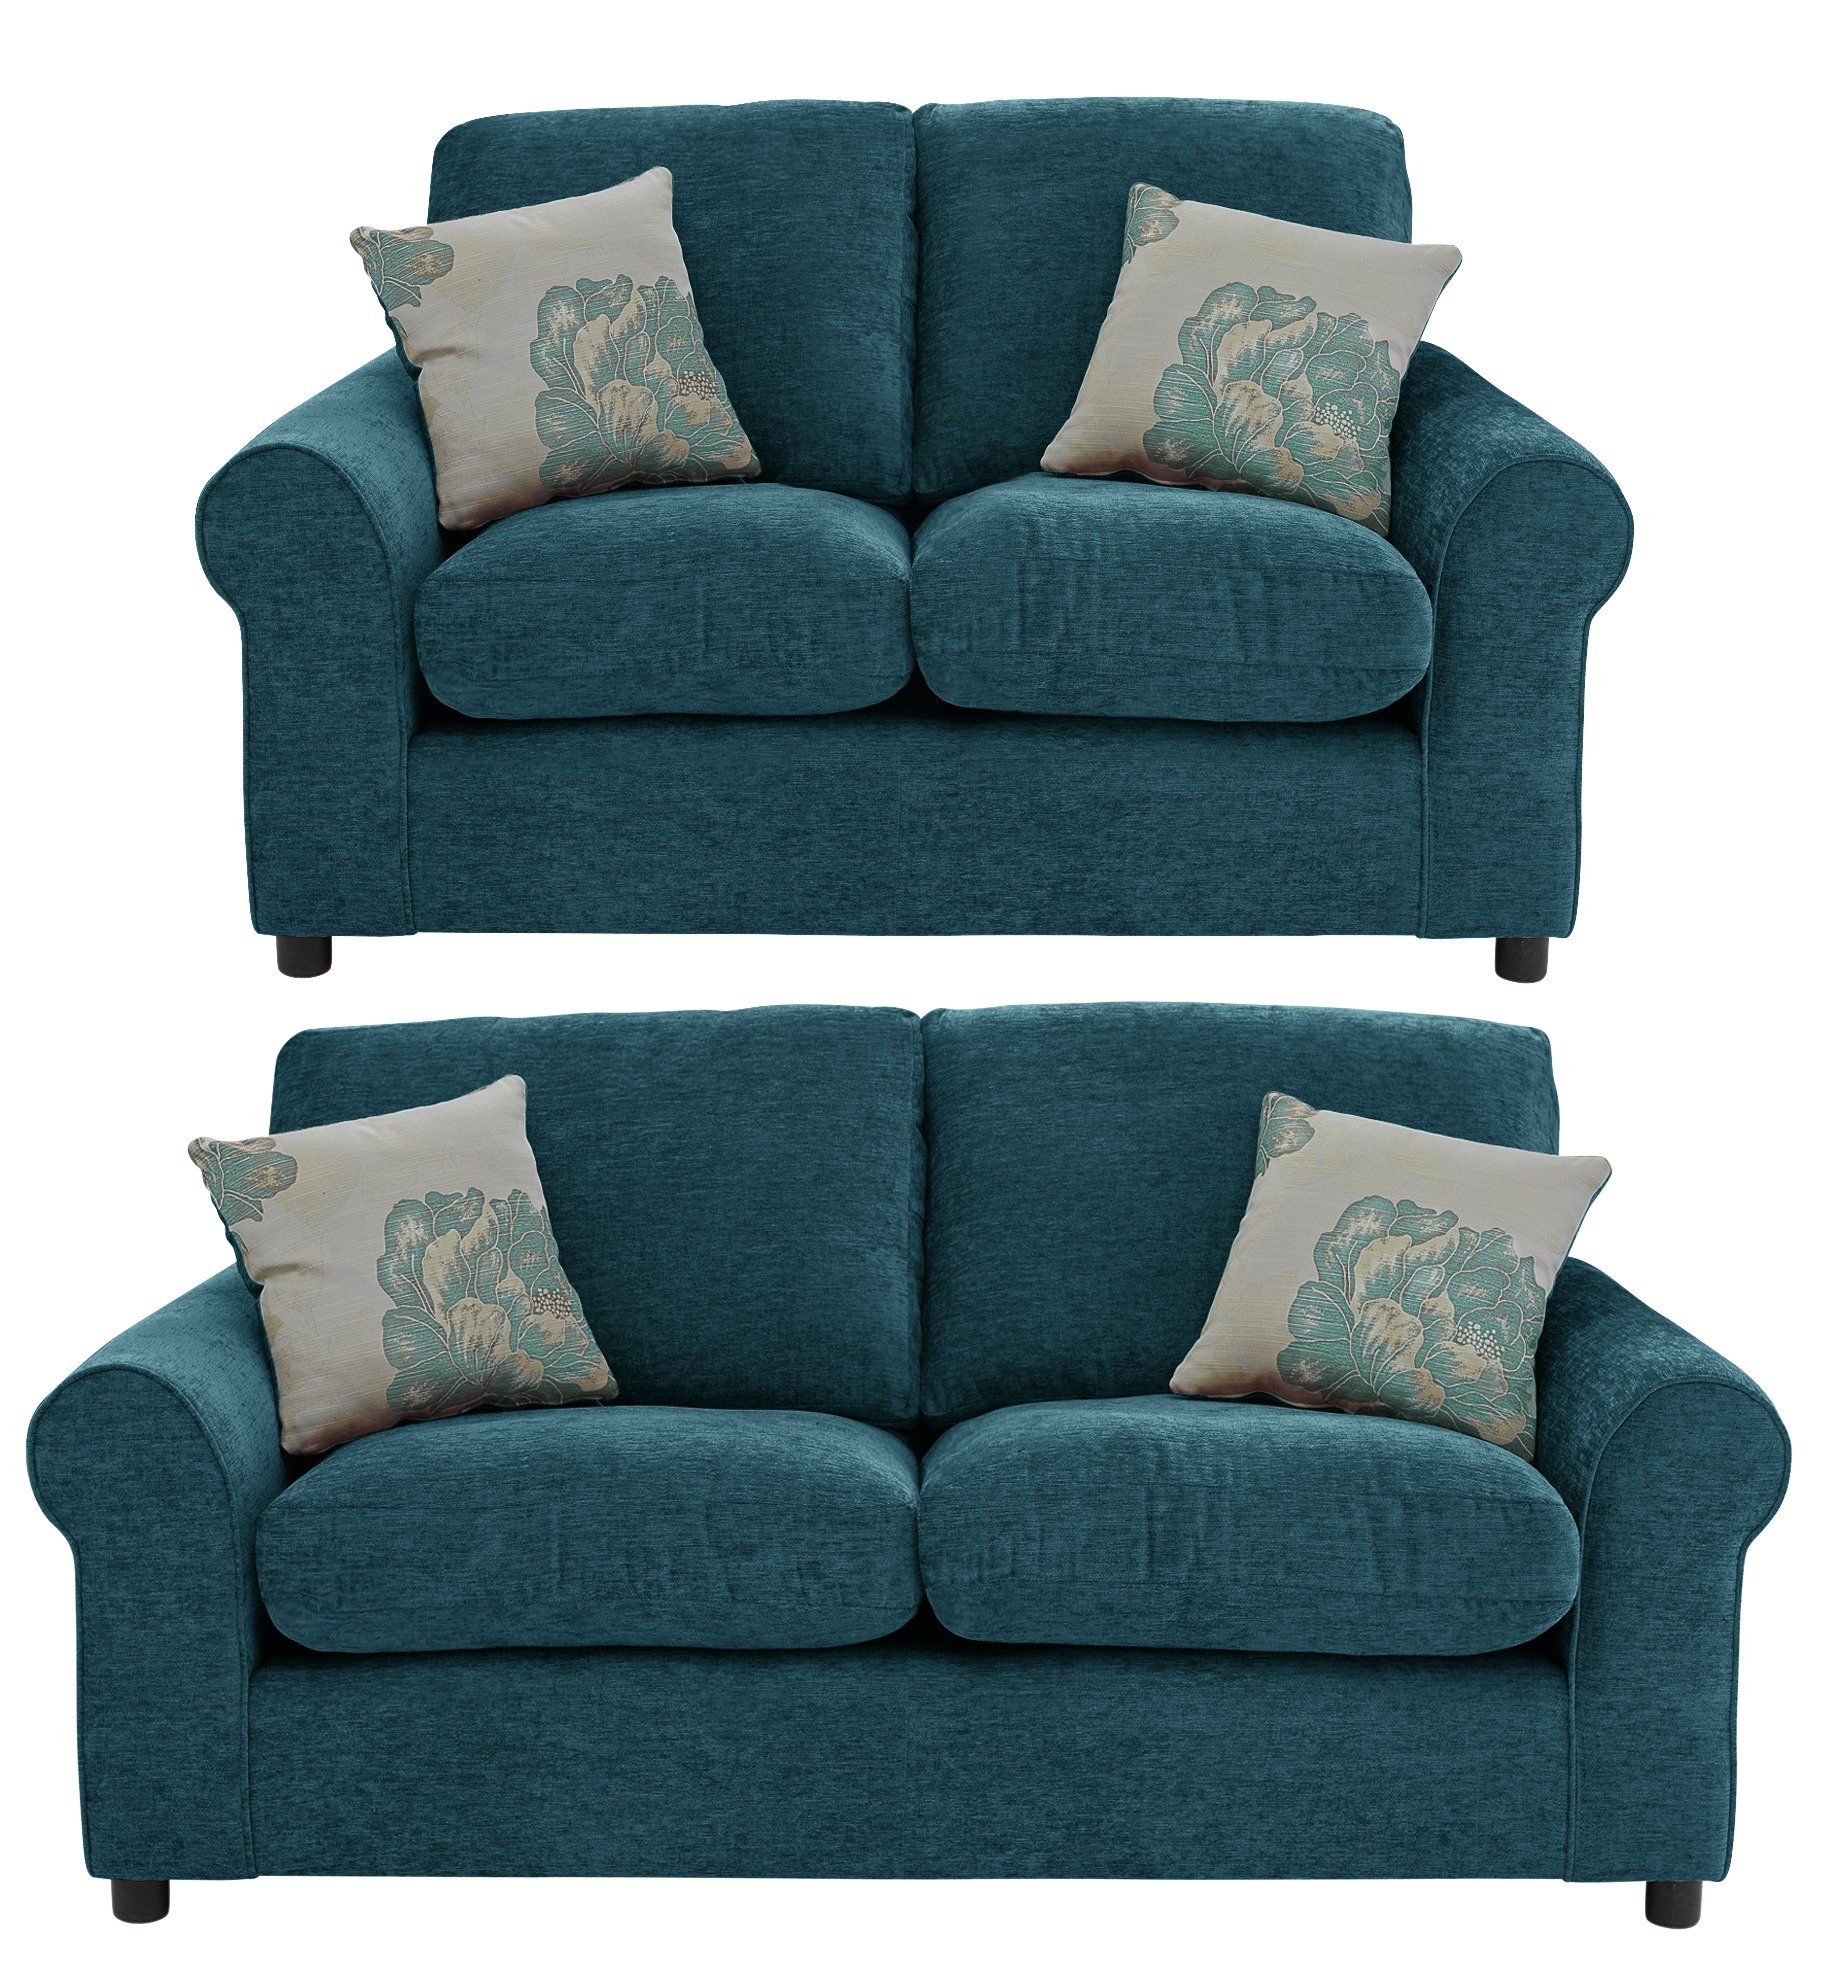 Argos Home Tessa Fabric 3 Seat & Compact 3 Seat Sofa - Teal